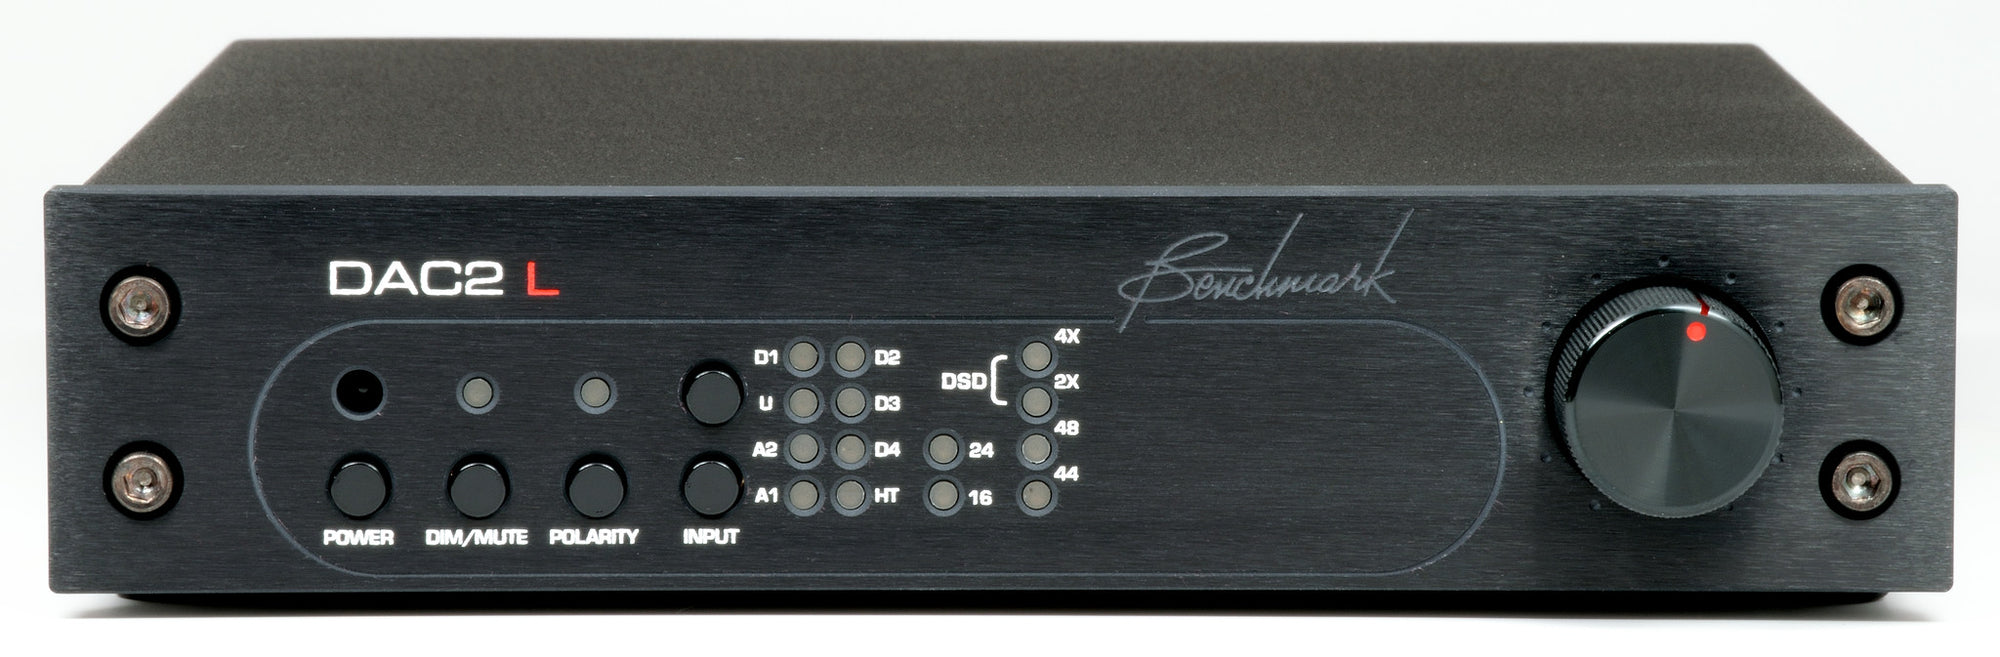 Benchmark DAC2 L Black - front